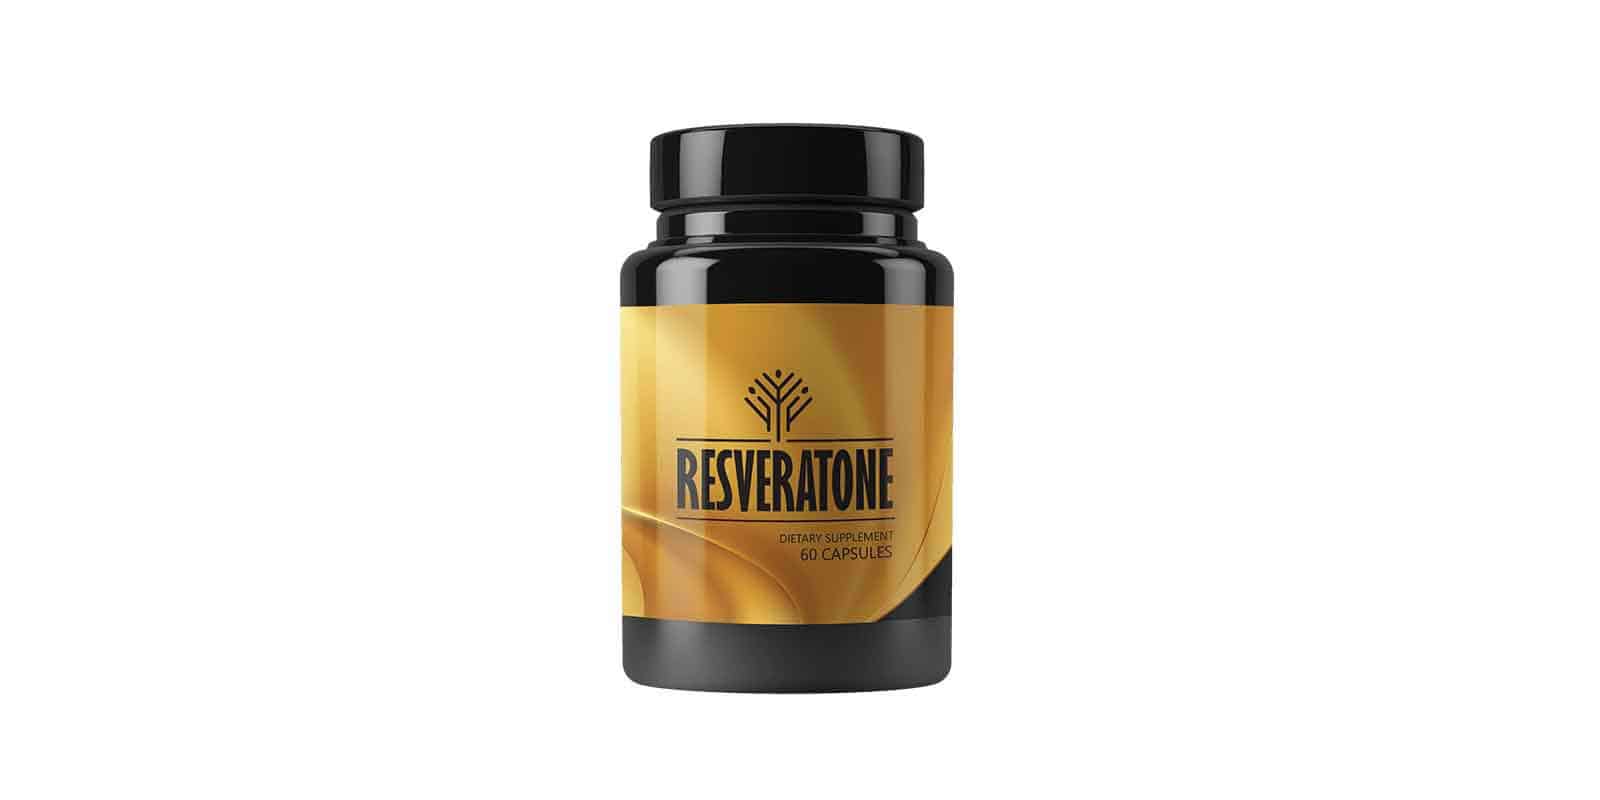 Resveratone Resveratrol Reviews